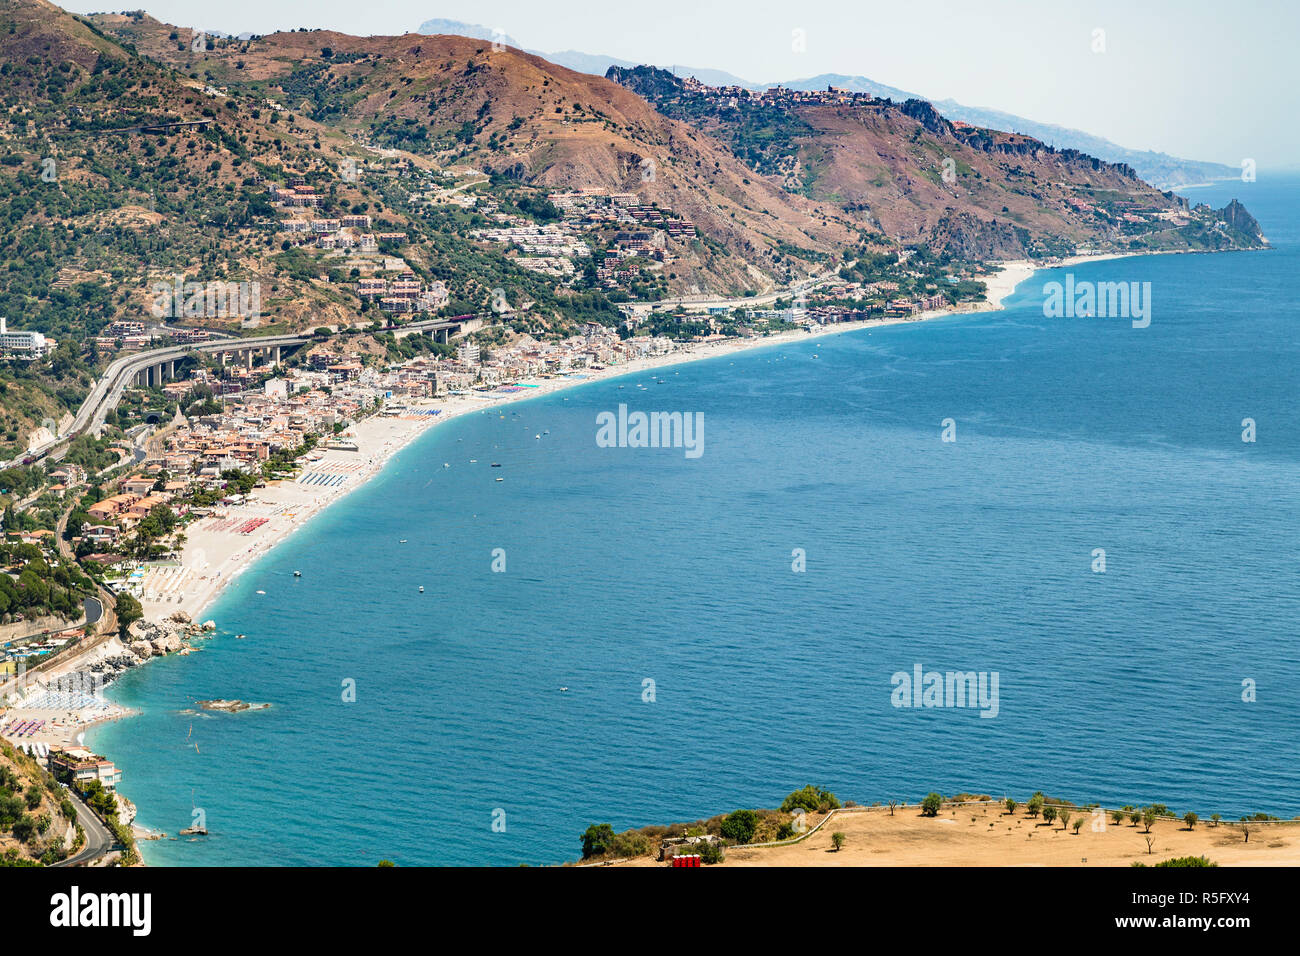 Letojanni resort village of shore of Ionian Sea Stock Photo